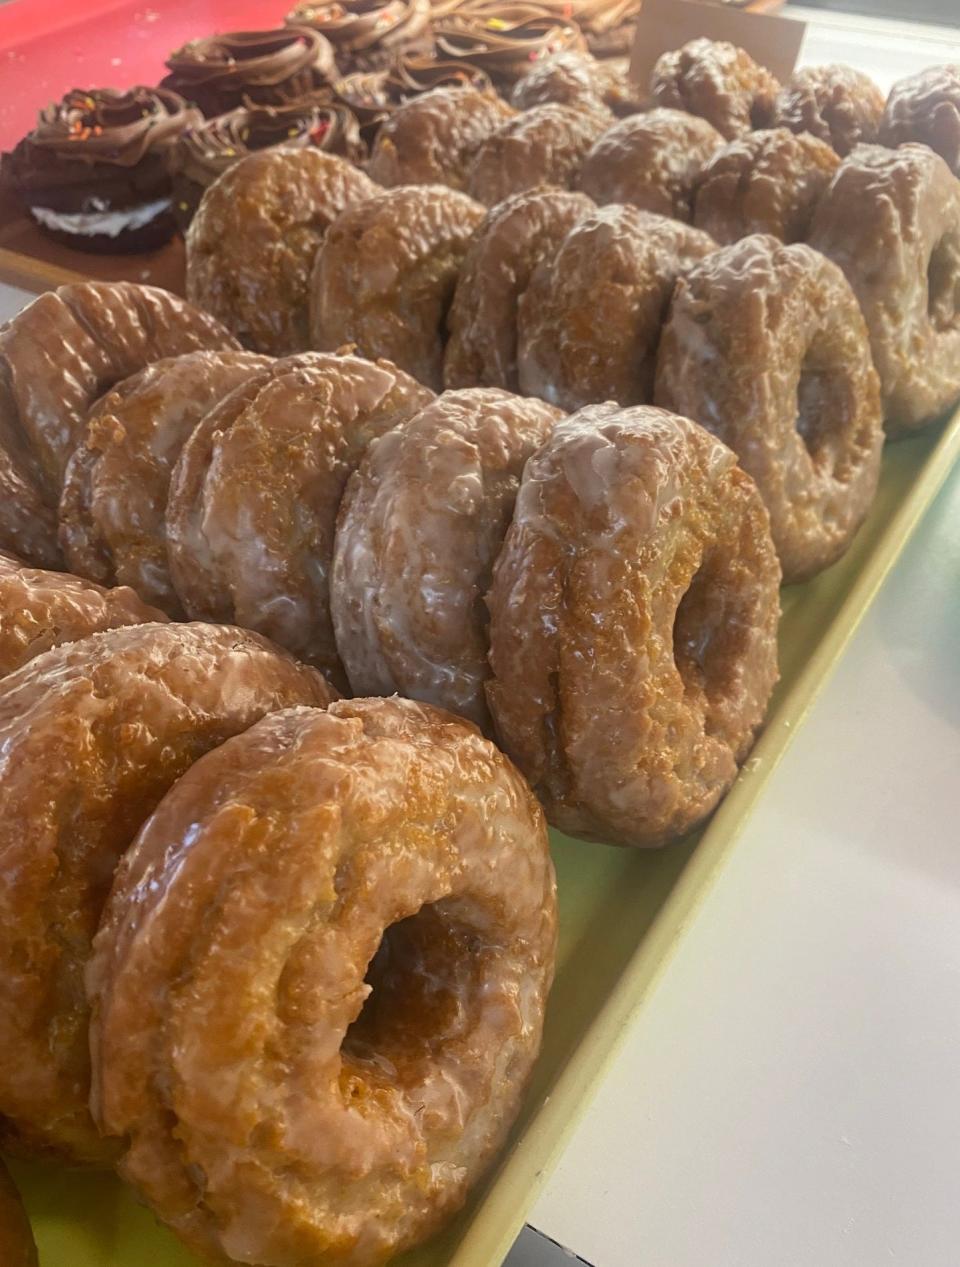 Leddy’s Bakery, 1481 S. Main St., Fall River, has apple crisp and pumpkin donuts.